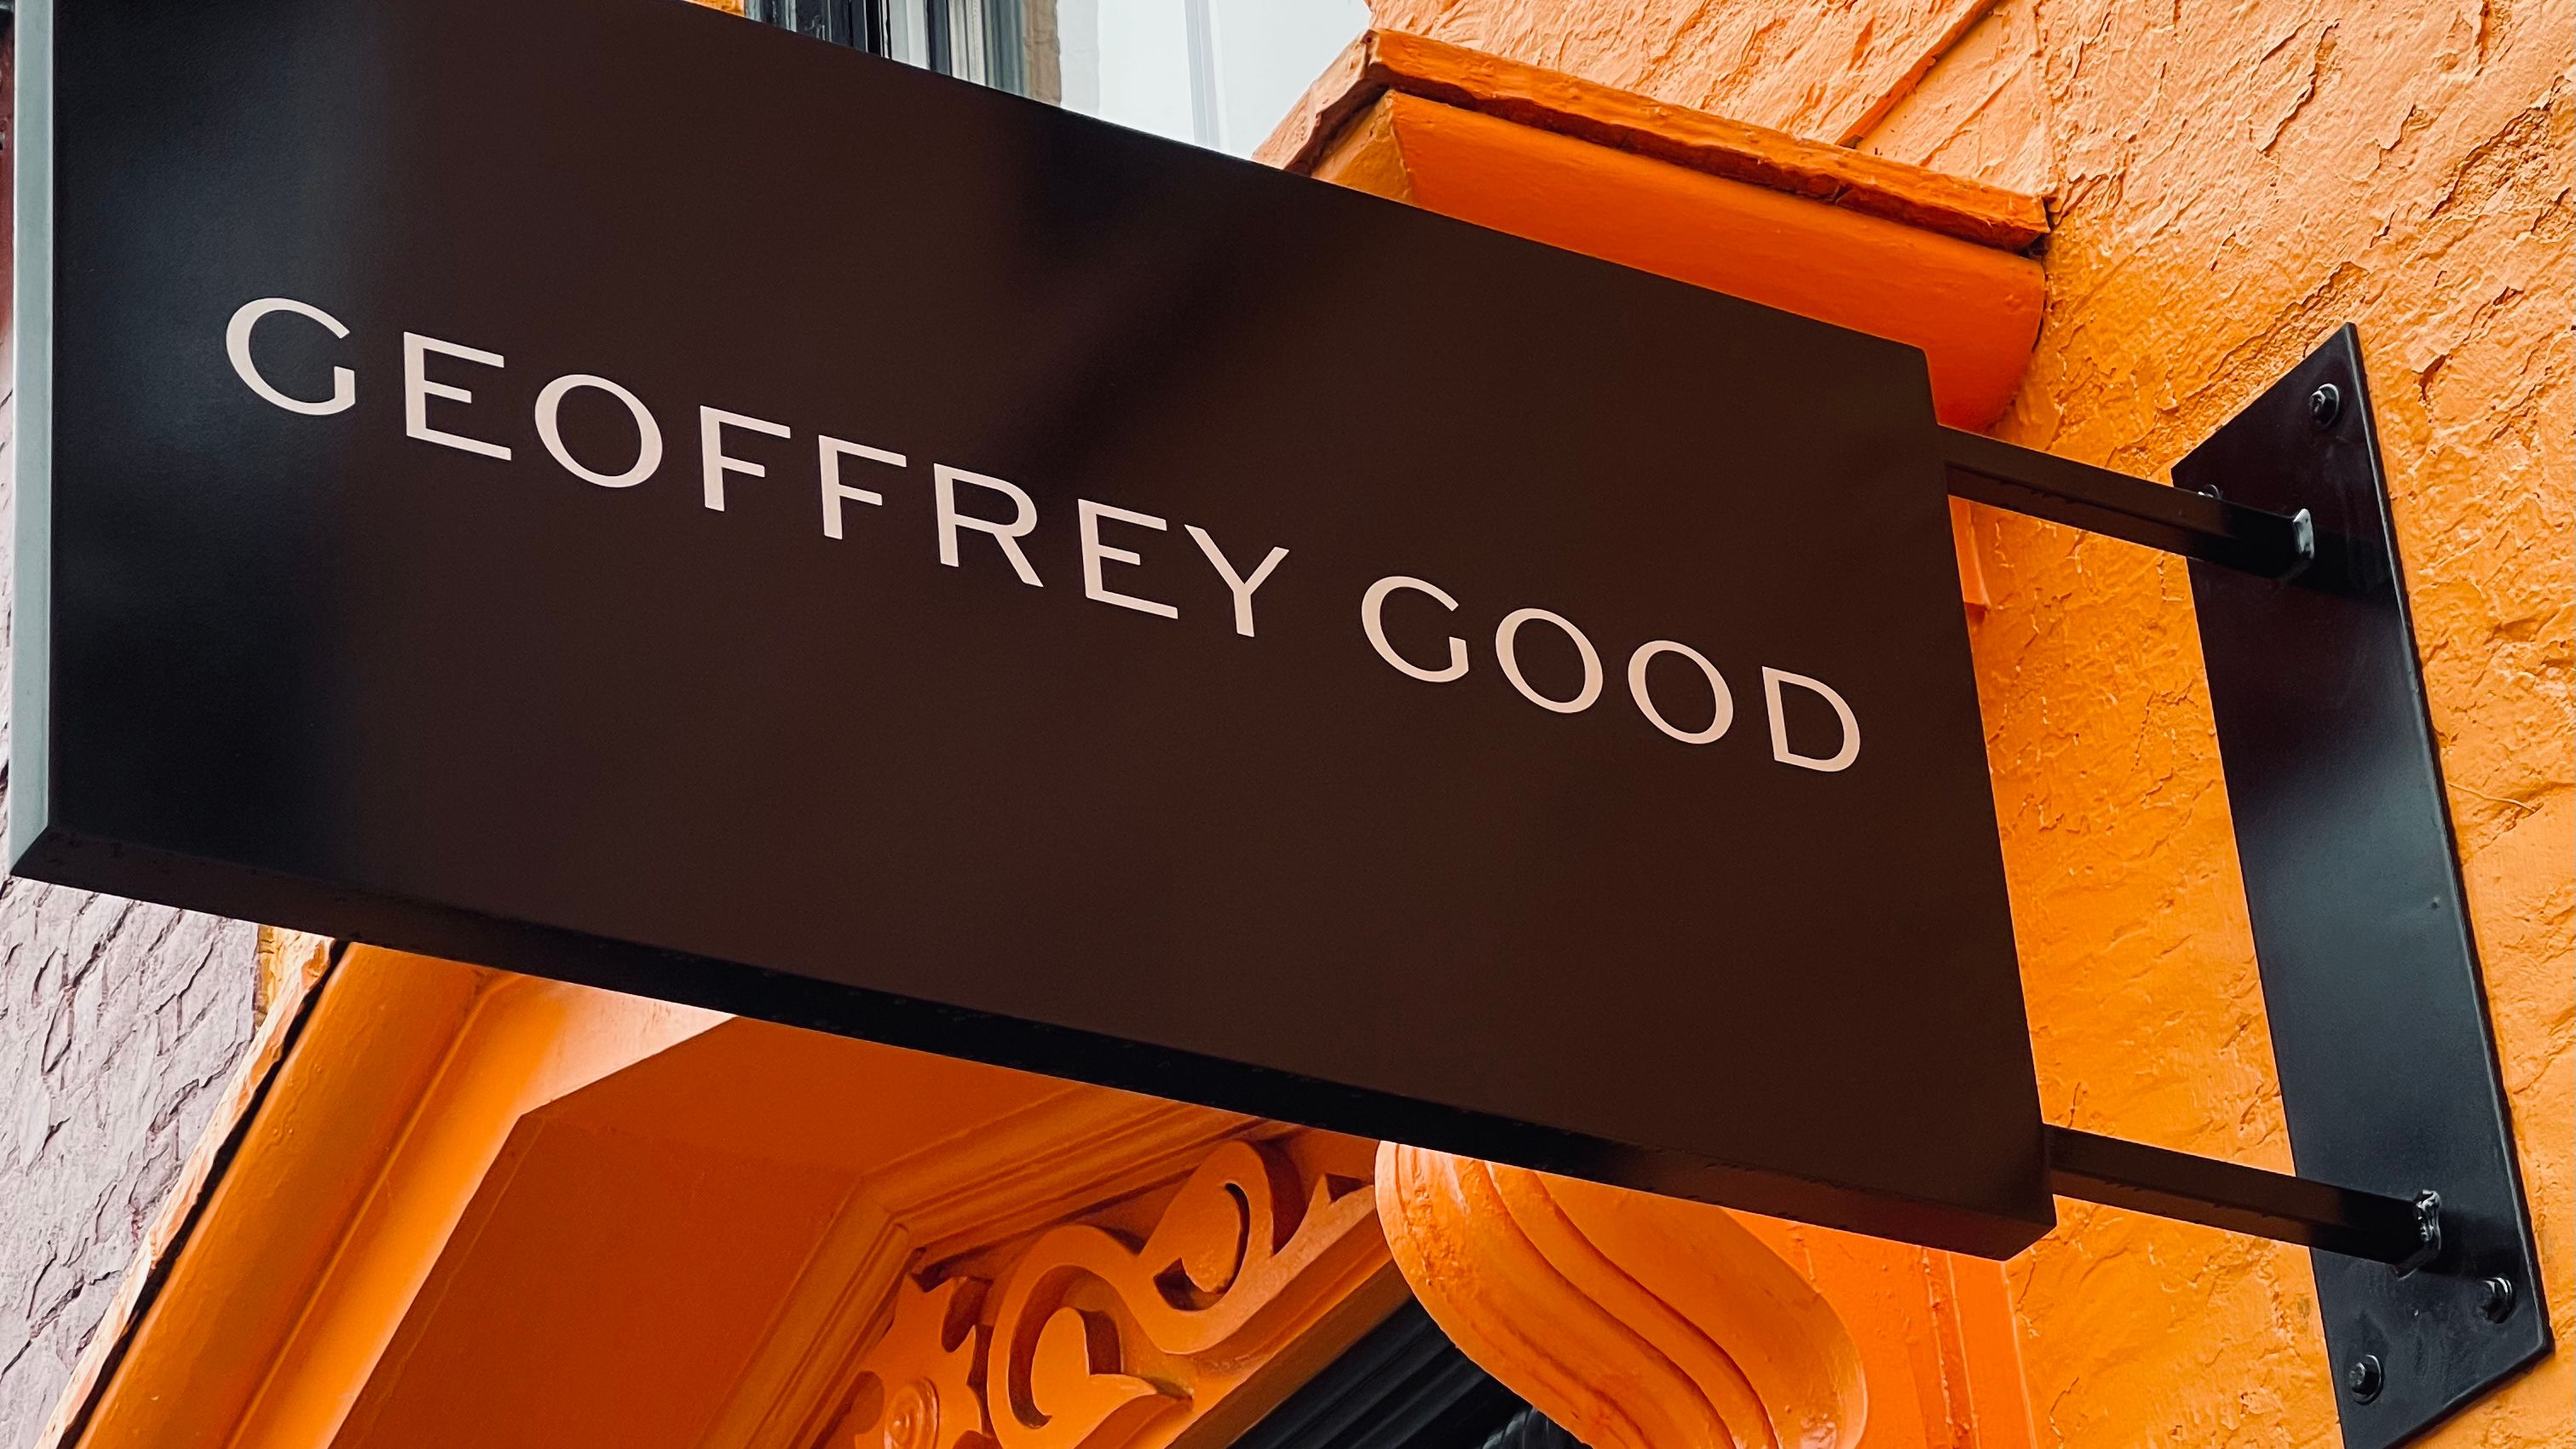 Shop image for GEOFFREY GOOD